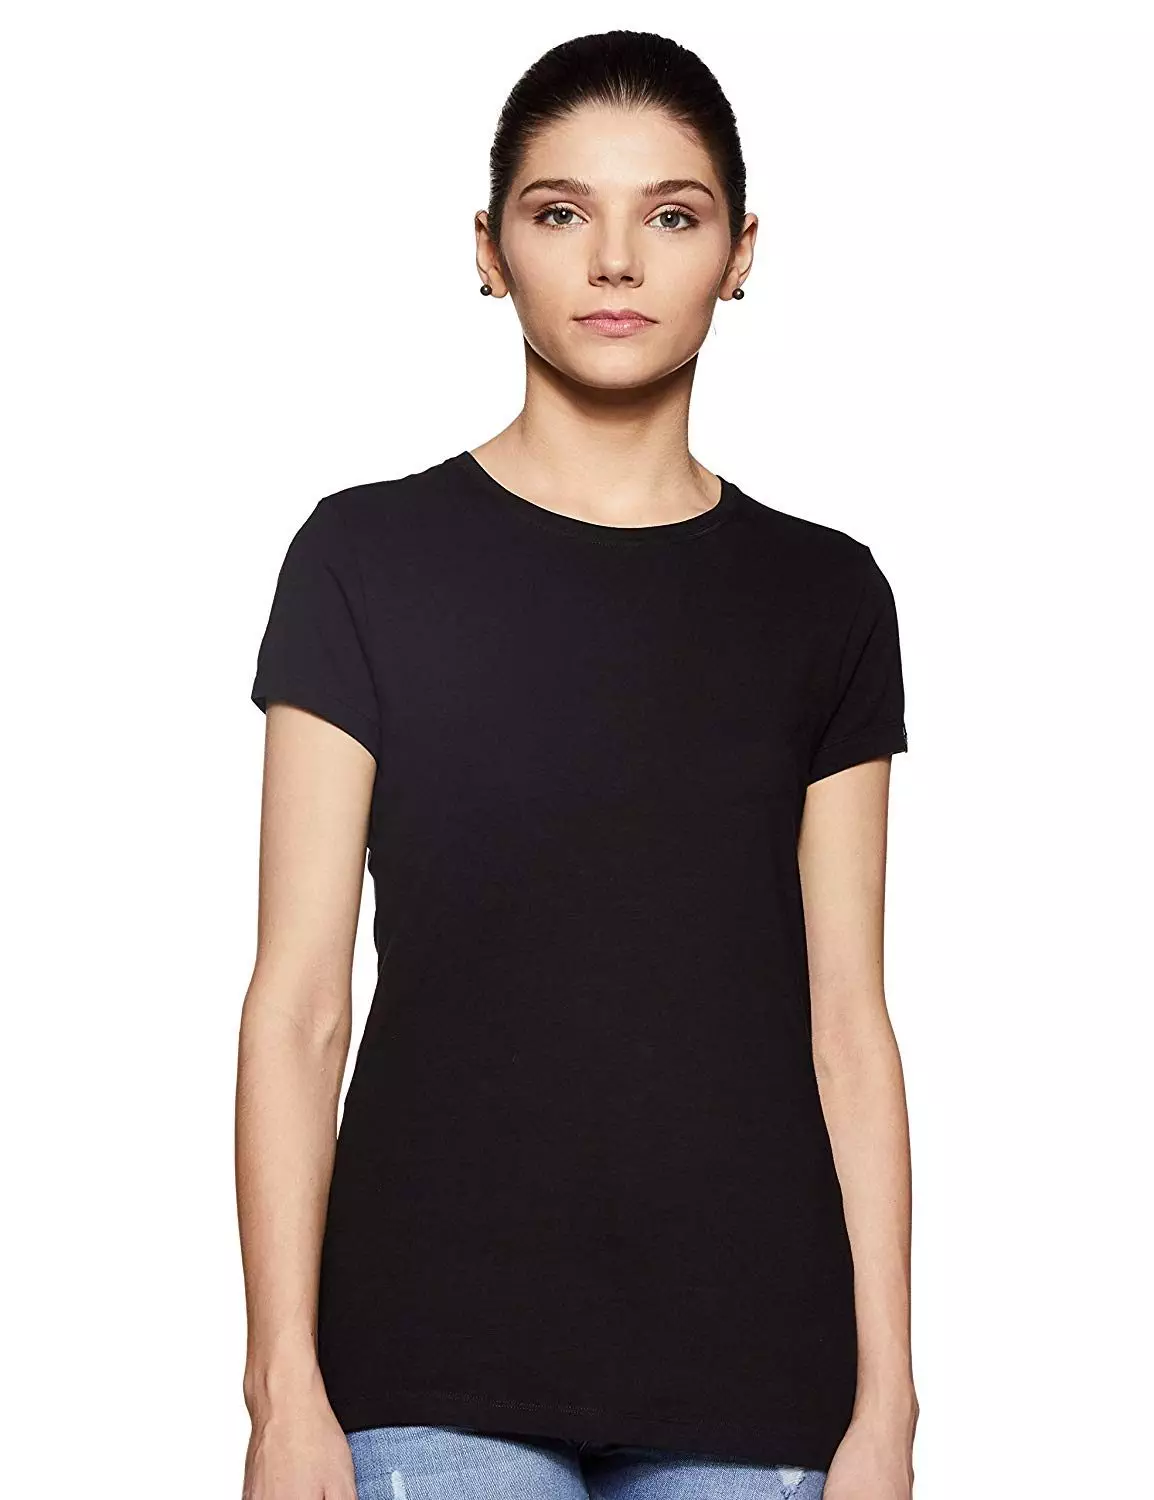 black plain tshirt for women